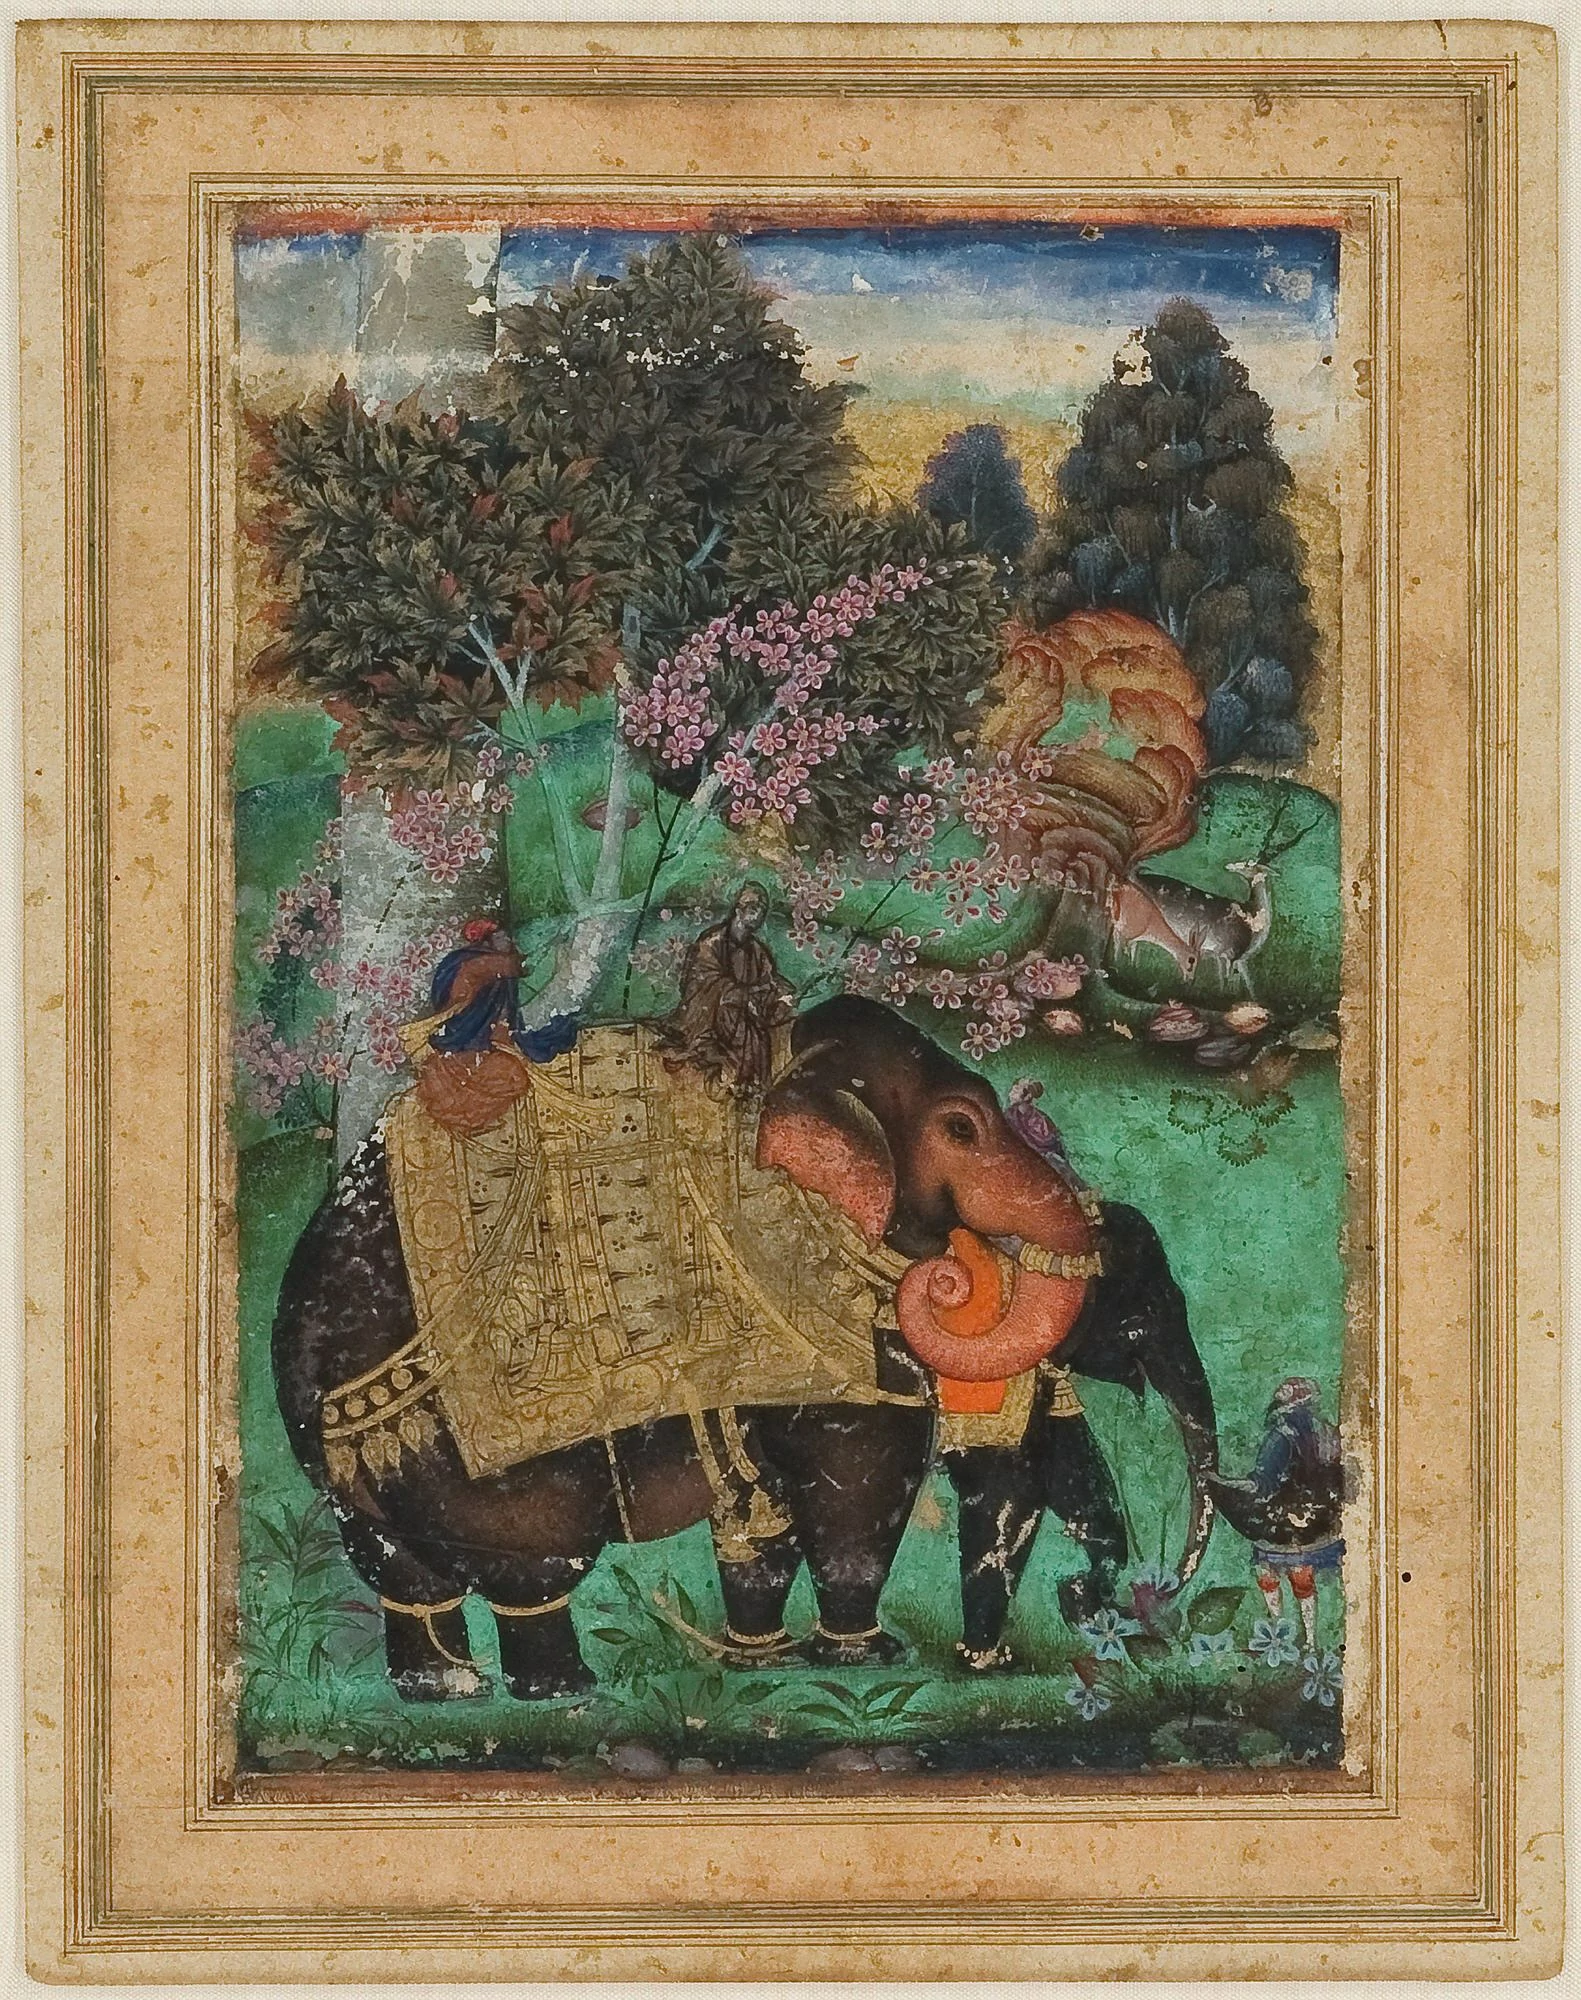 Sultan Ibrahim Adil Shah II Riding His Prized Elephant Atash Khan, Farrukh Beg